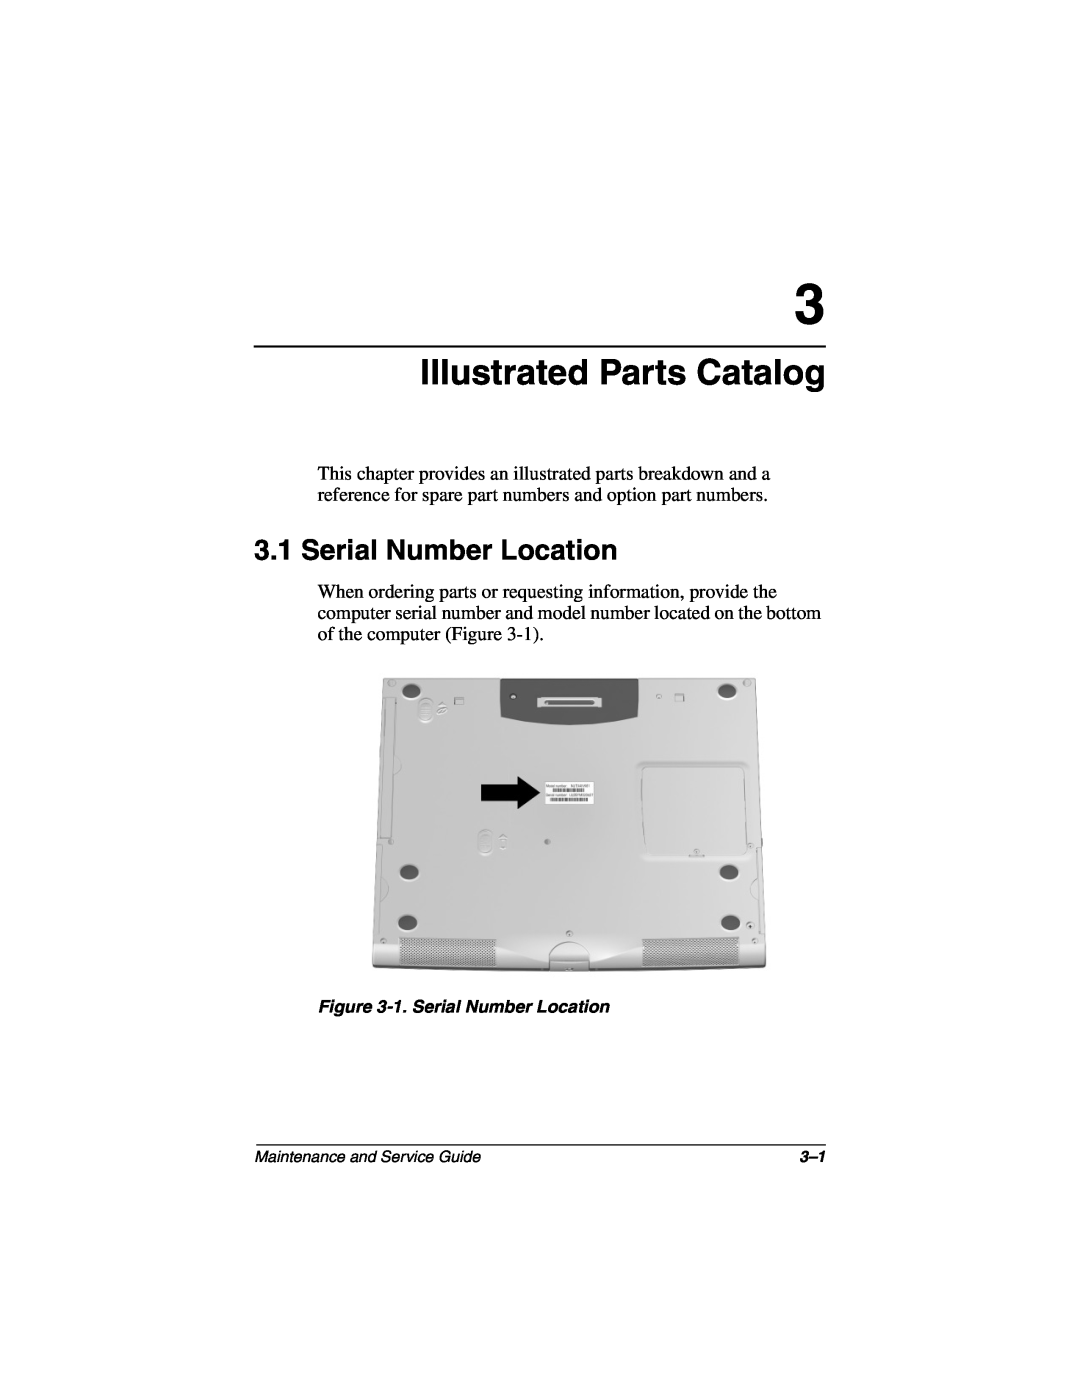 Compaq N160 manual Illustrated Parts Catalog, Serial Number Location 